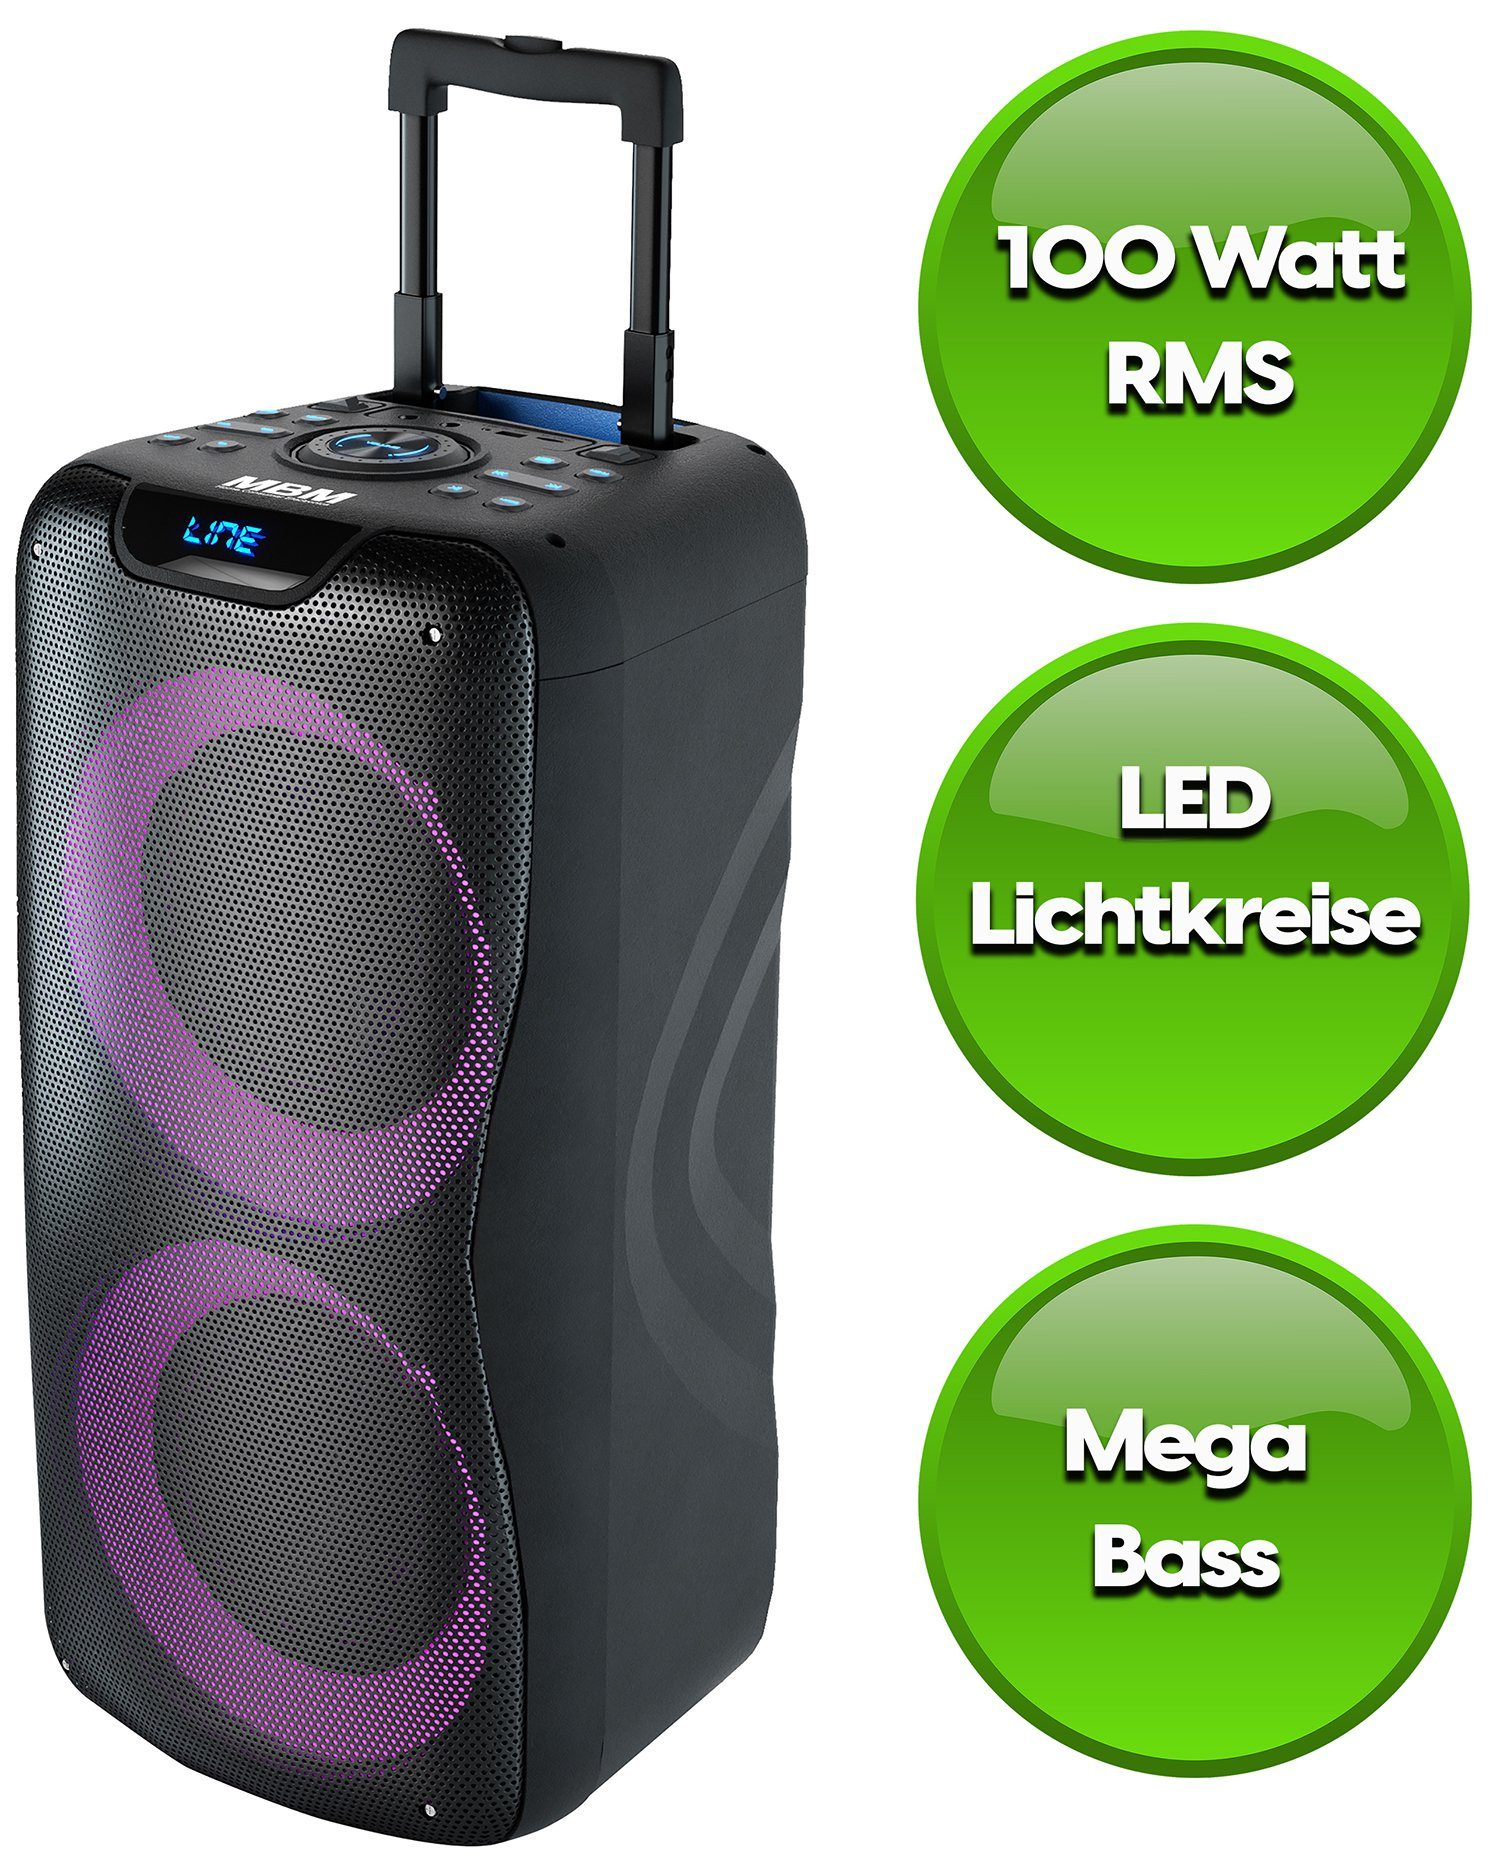 JTC LSPY829 Party-Lautsprecher (100 W, Bluetooth, hochauflösender Klang, 2 LED Lichtkreise, Mega Bass)